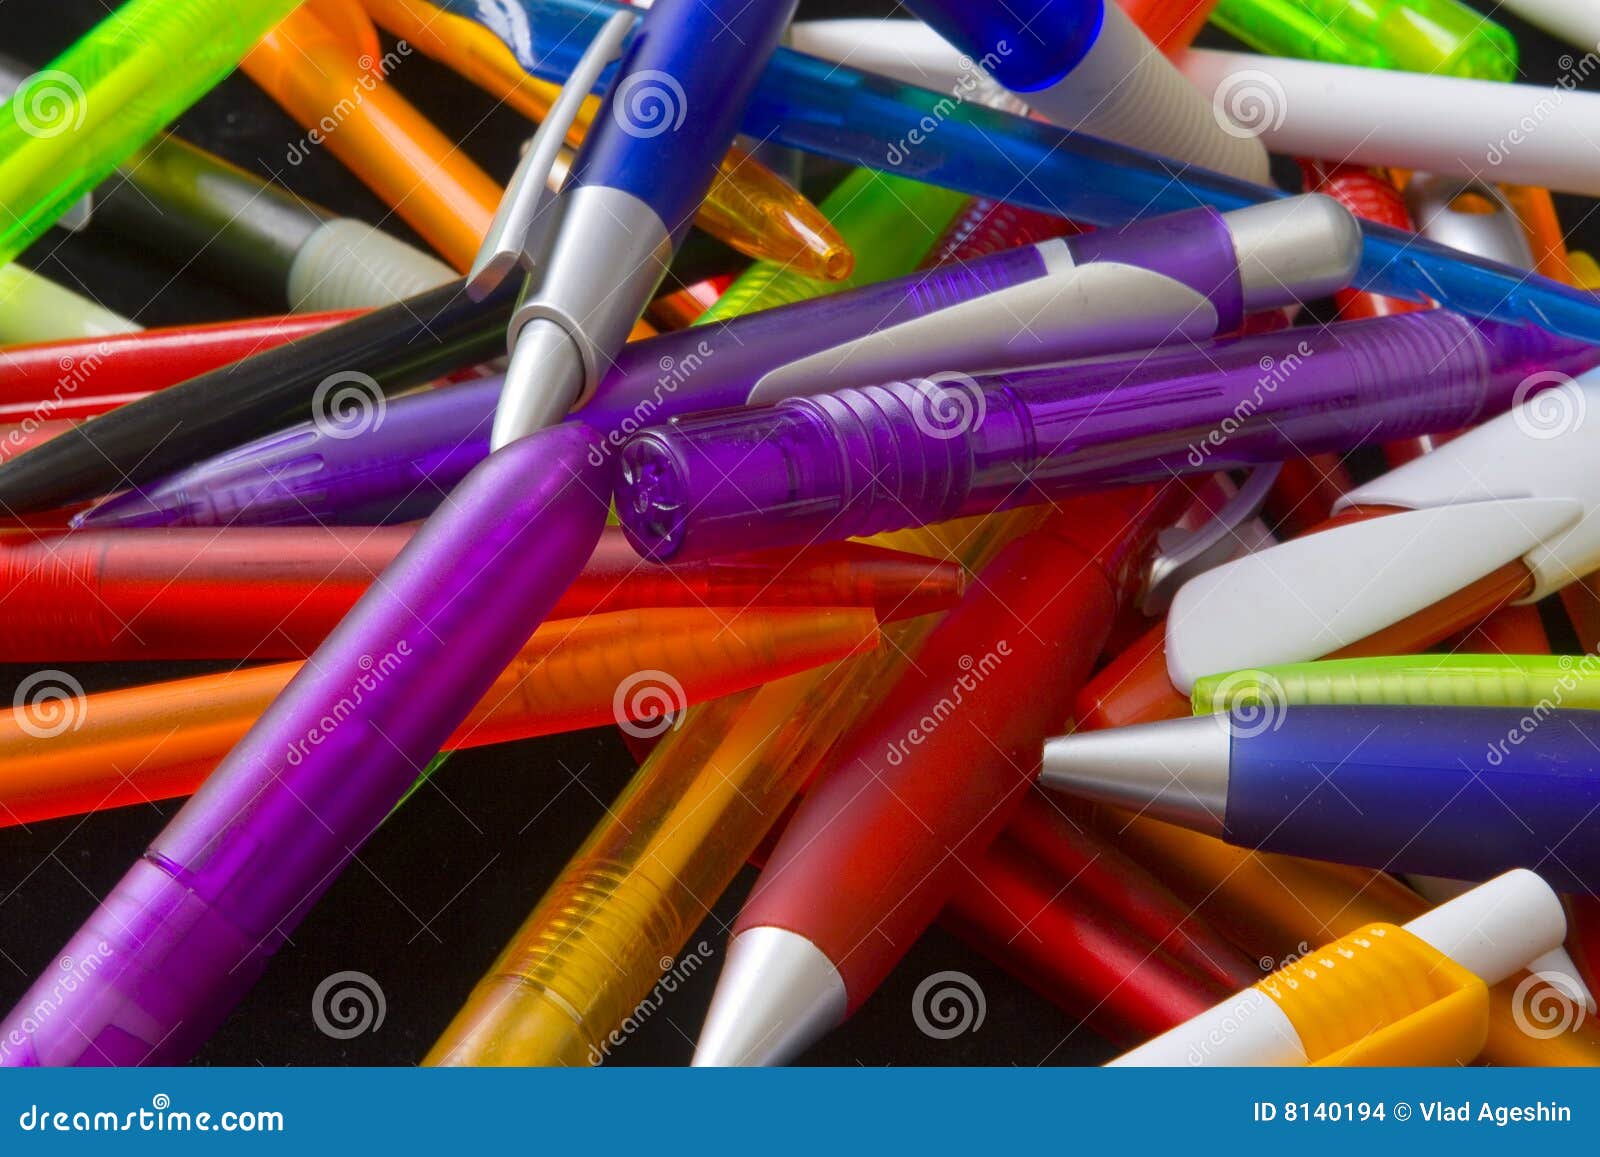 different pens